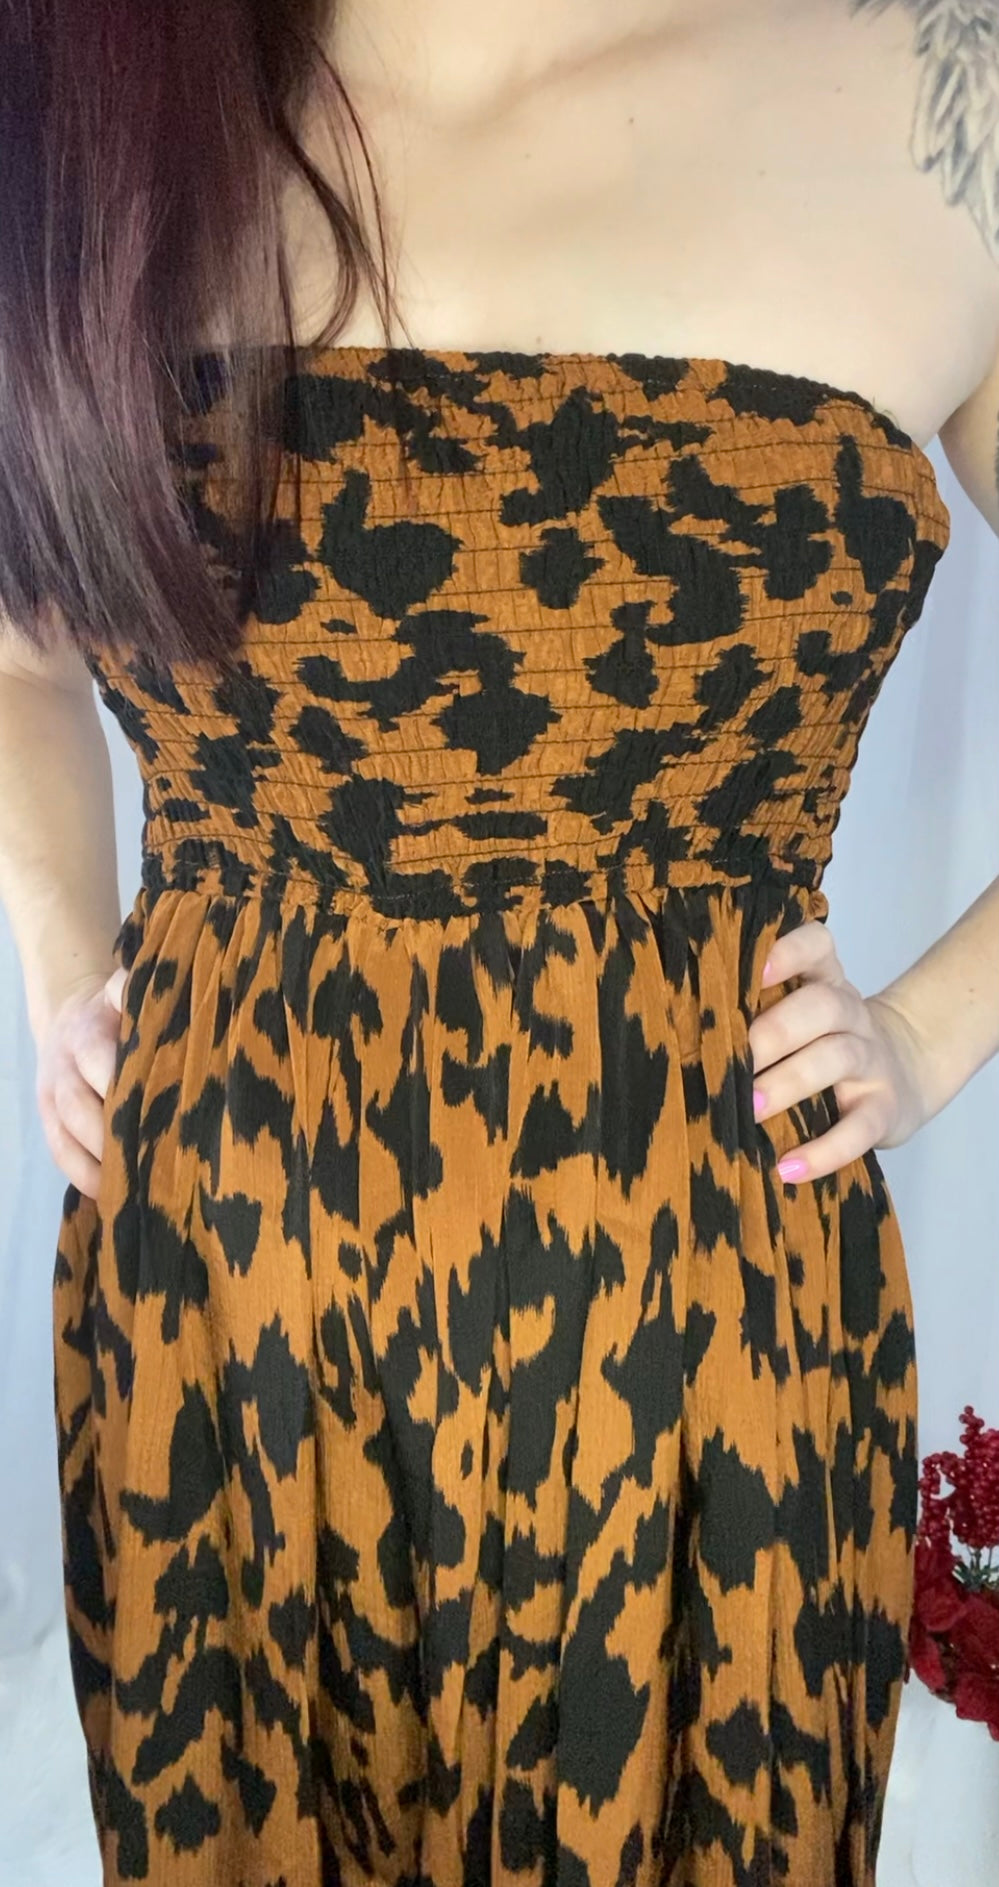 Rusty Leopard Print Jumpsuit